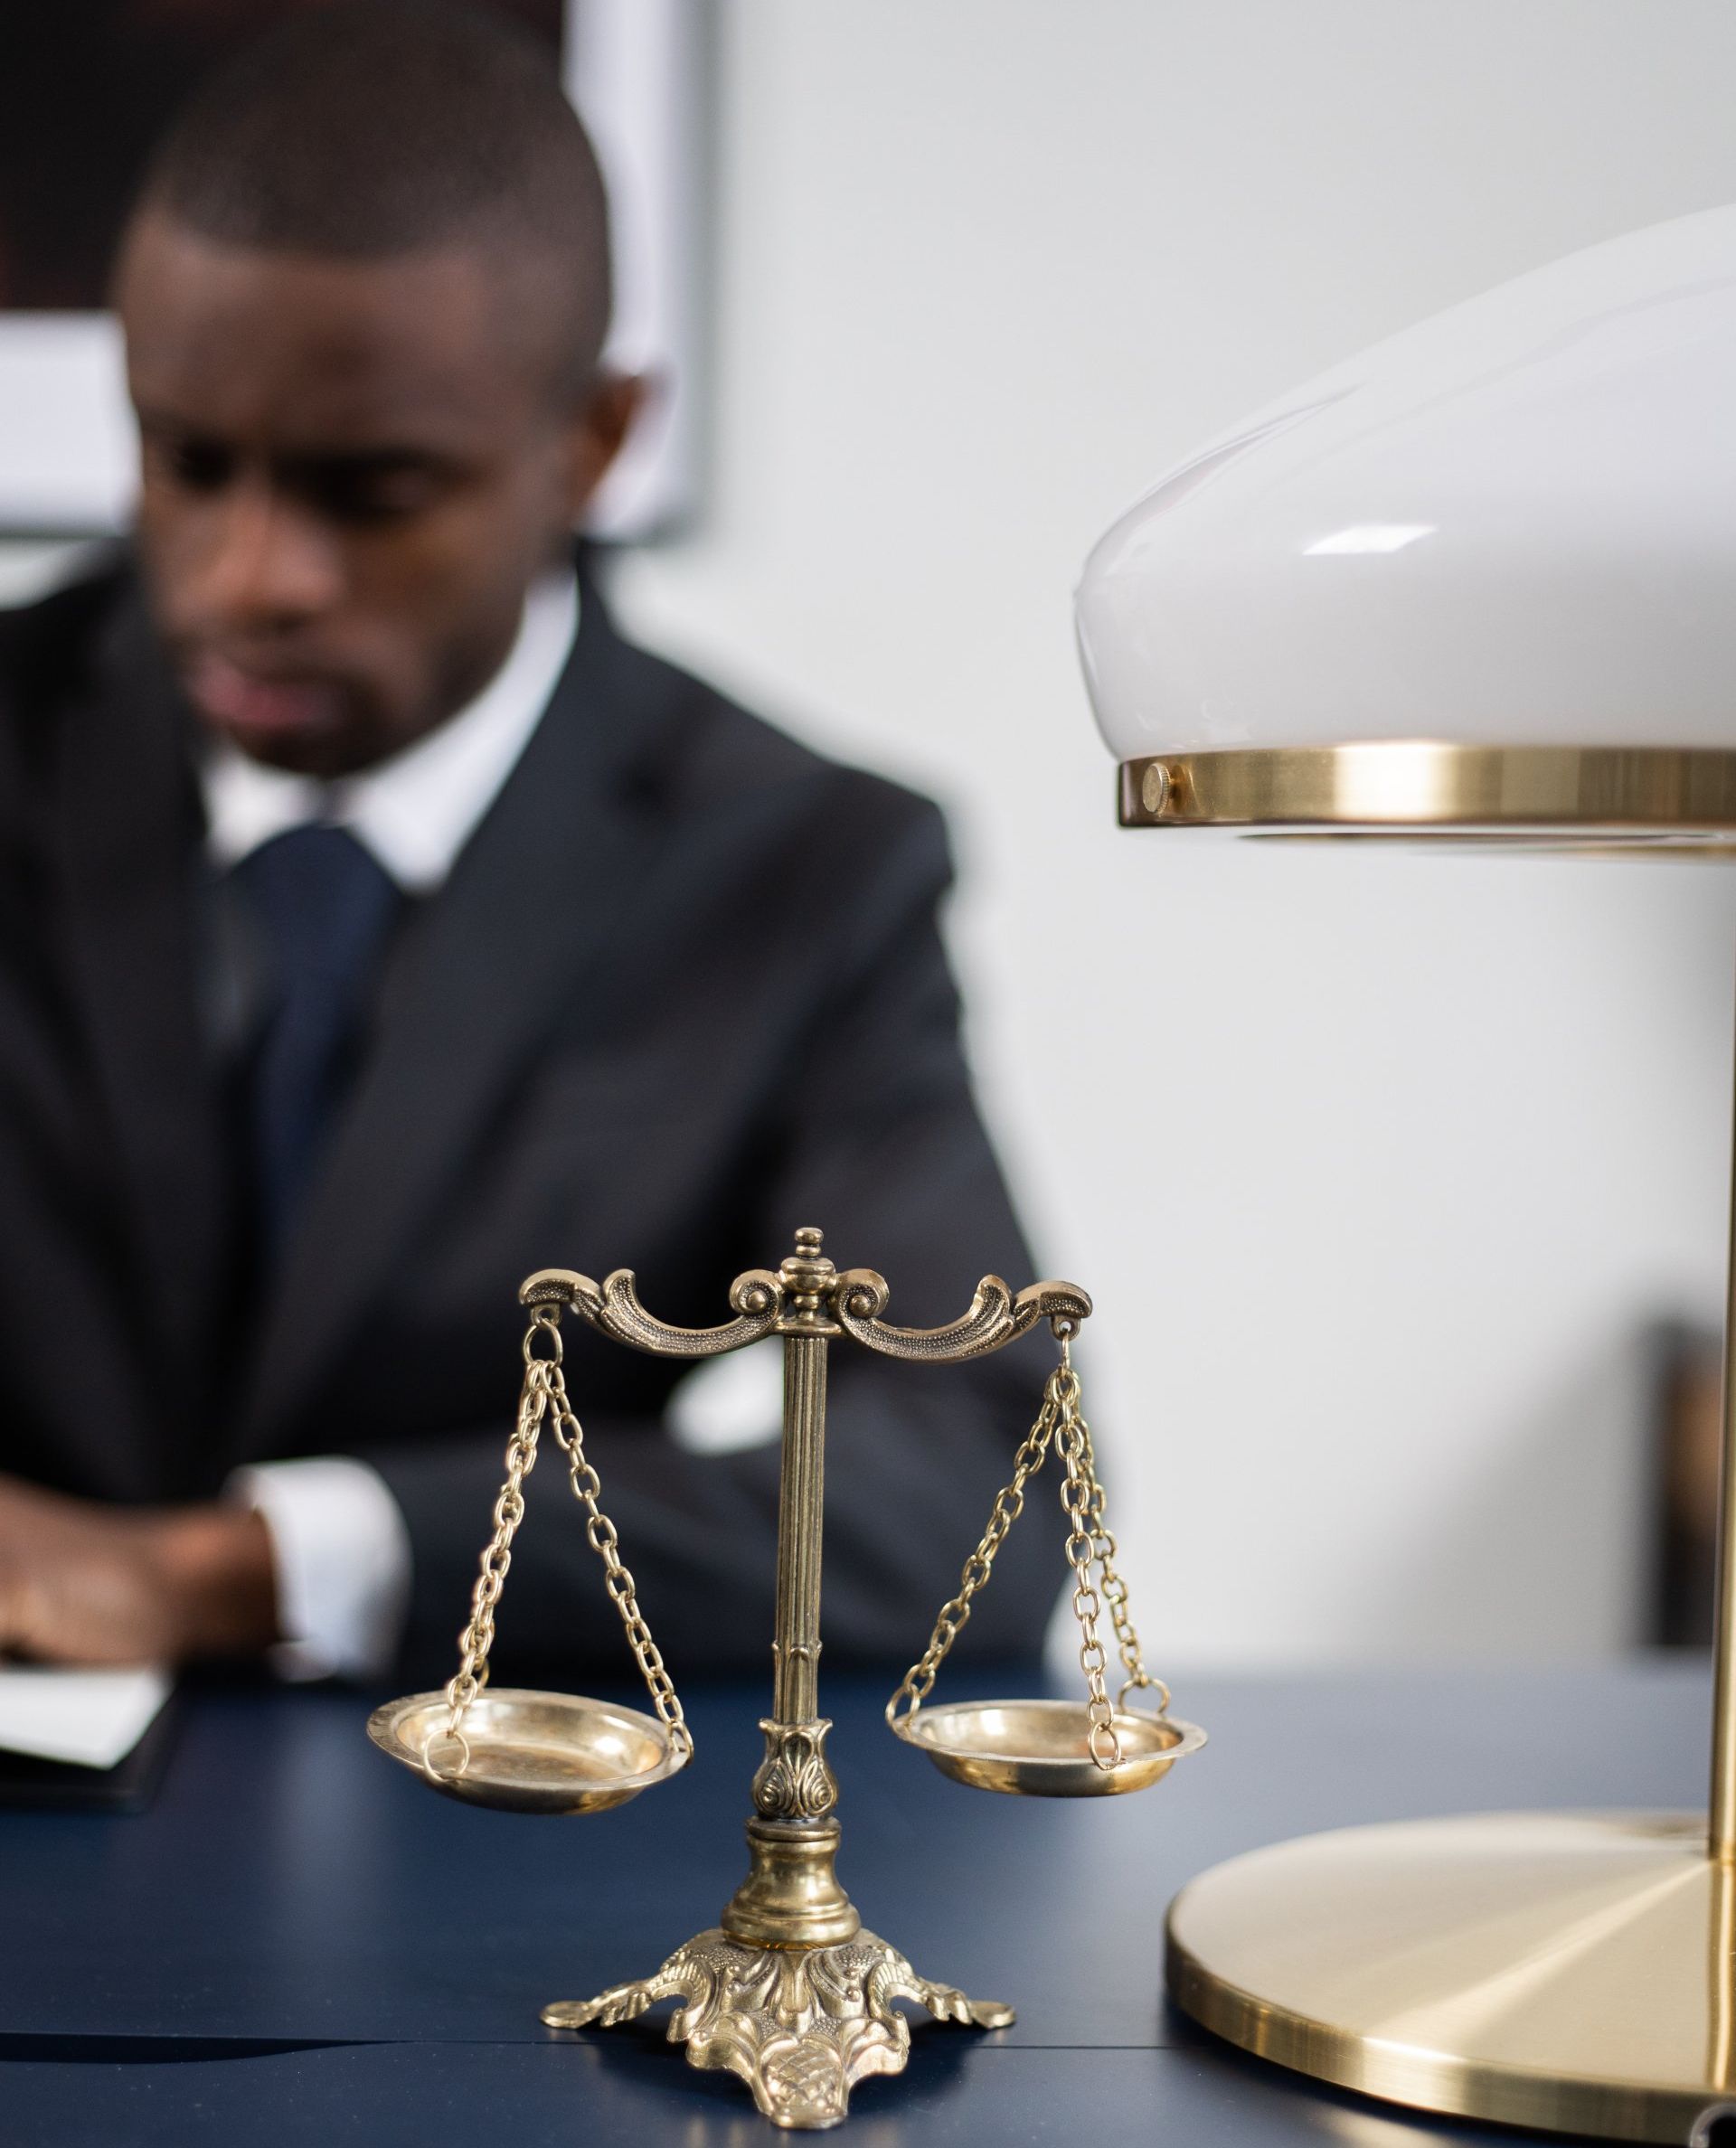 a man in a suit sits at a desk next to a scale of justice